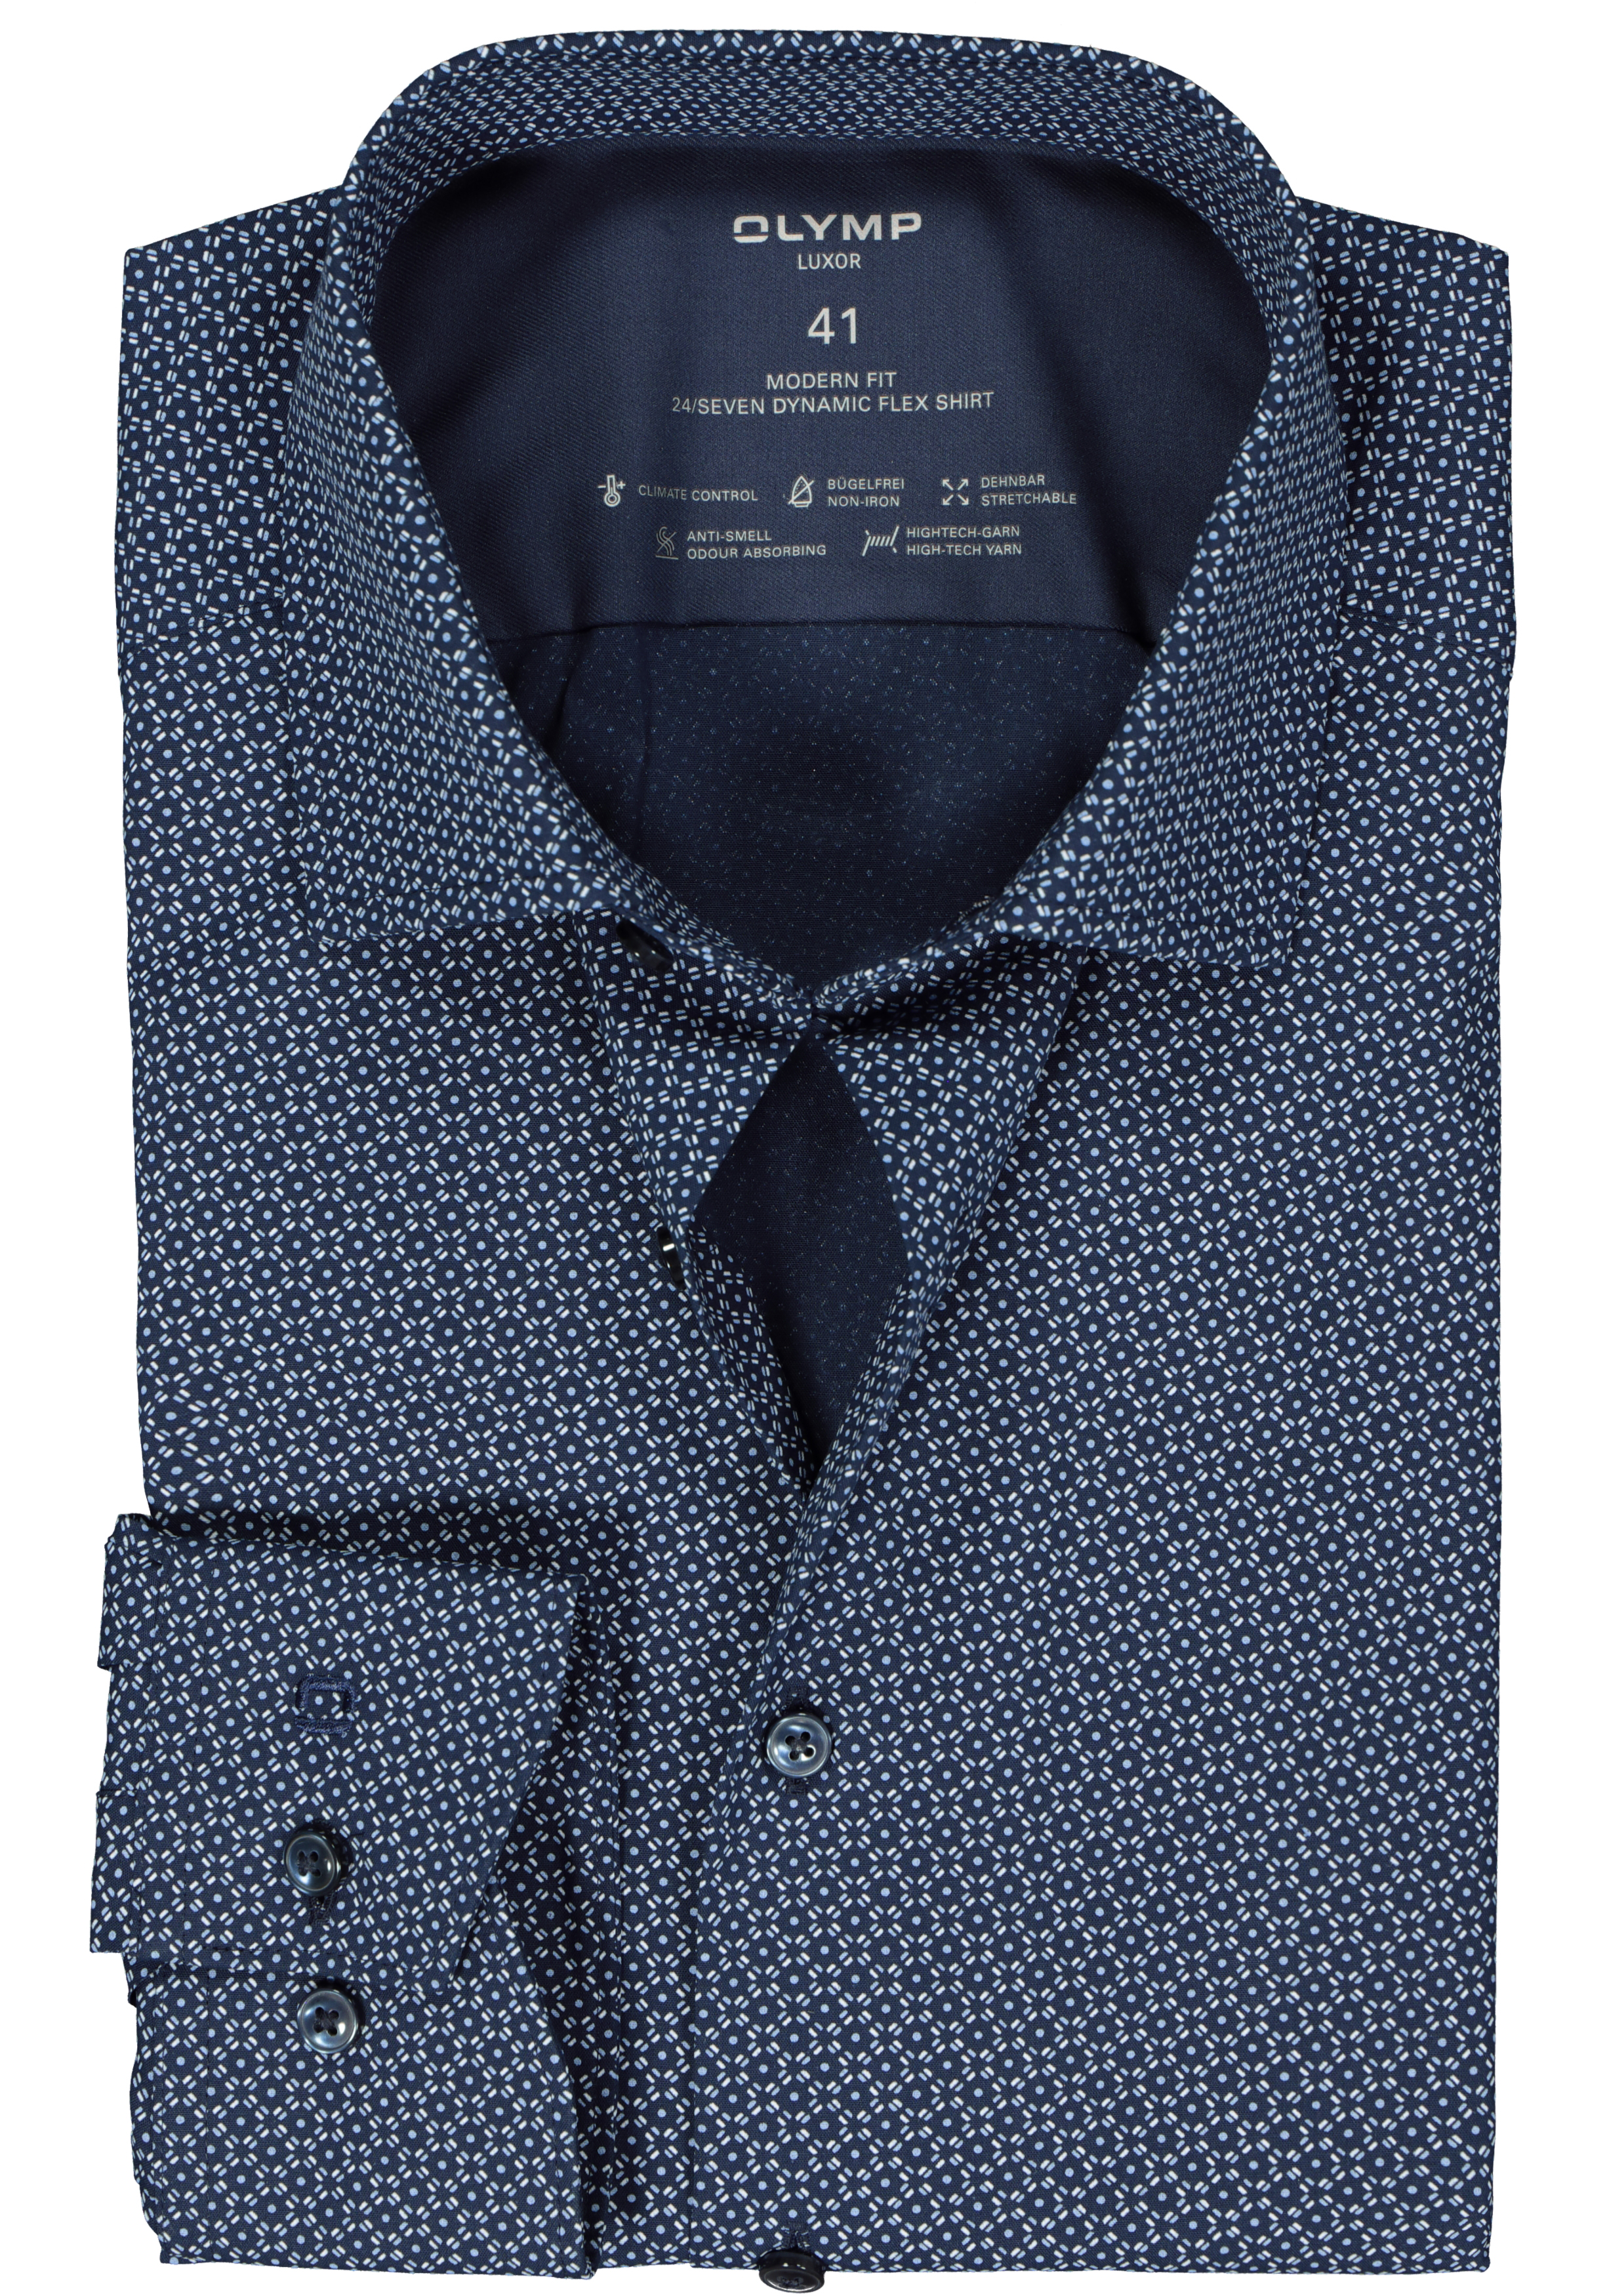 OLYMP 24/7 modern fit overhemd, popeline, blauw met wit dessin